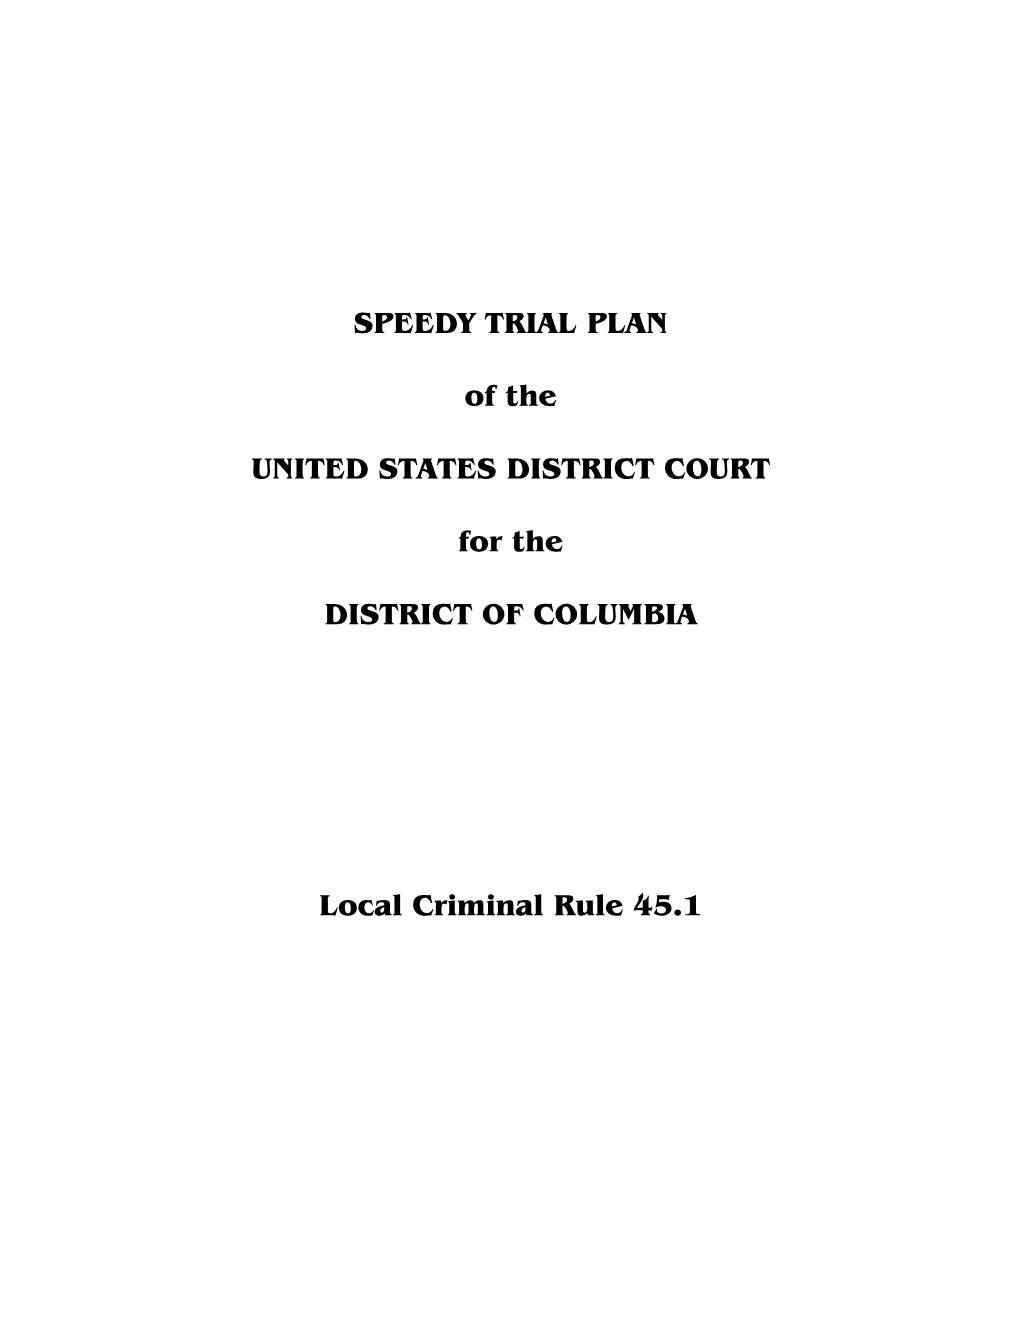 Speedy Trial Plan